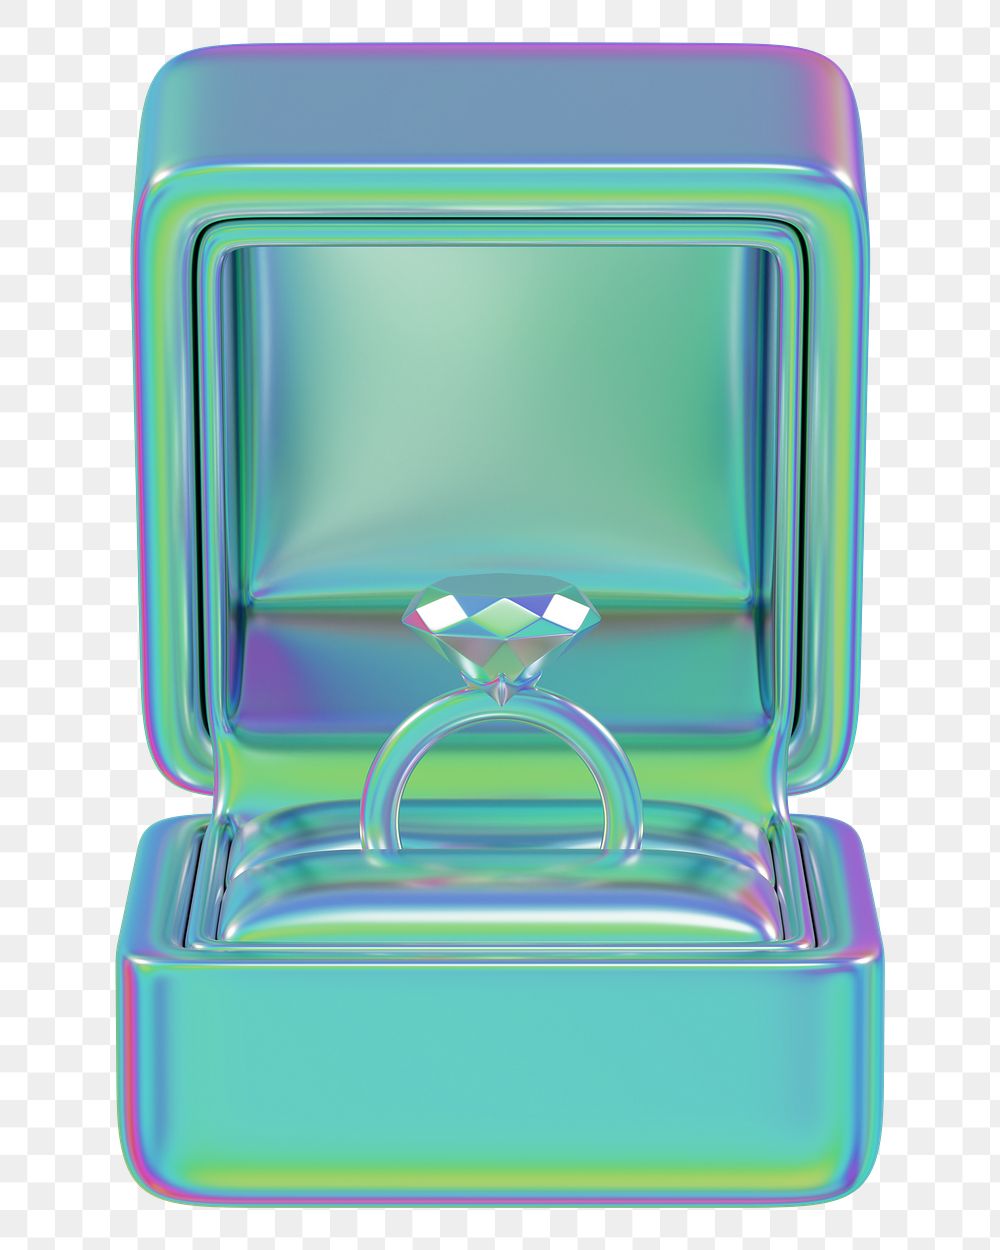 Holographic engagement ring box png 3D illustration, transparent background